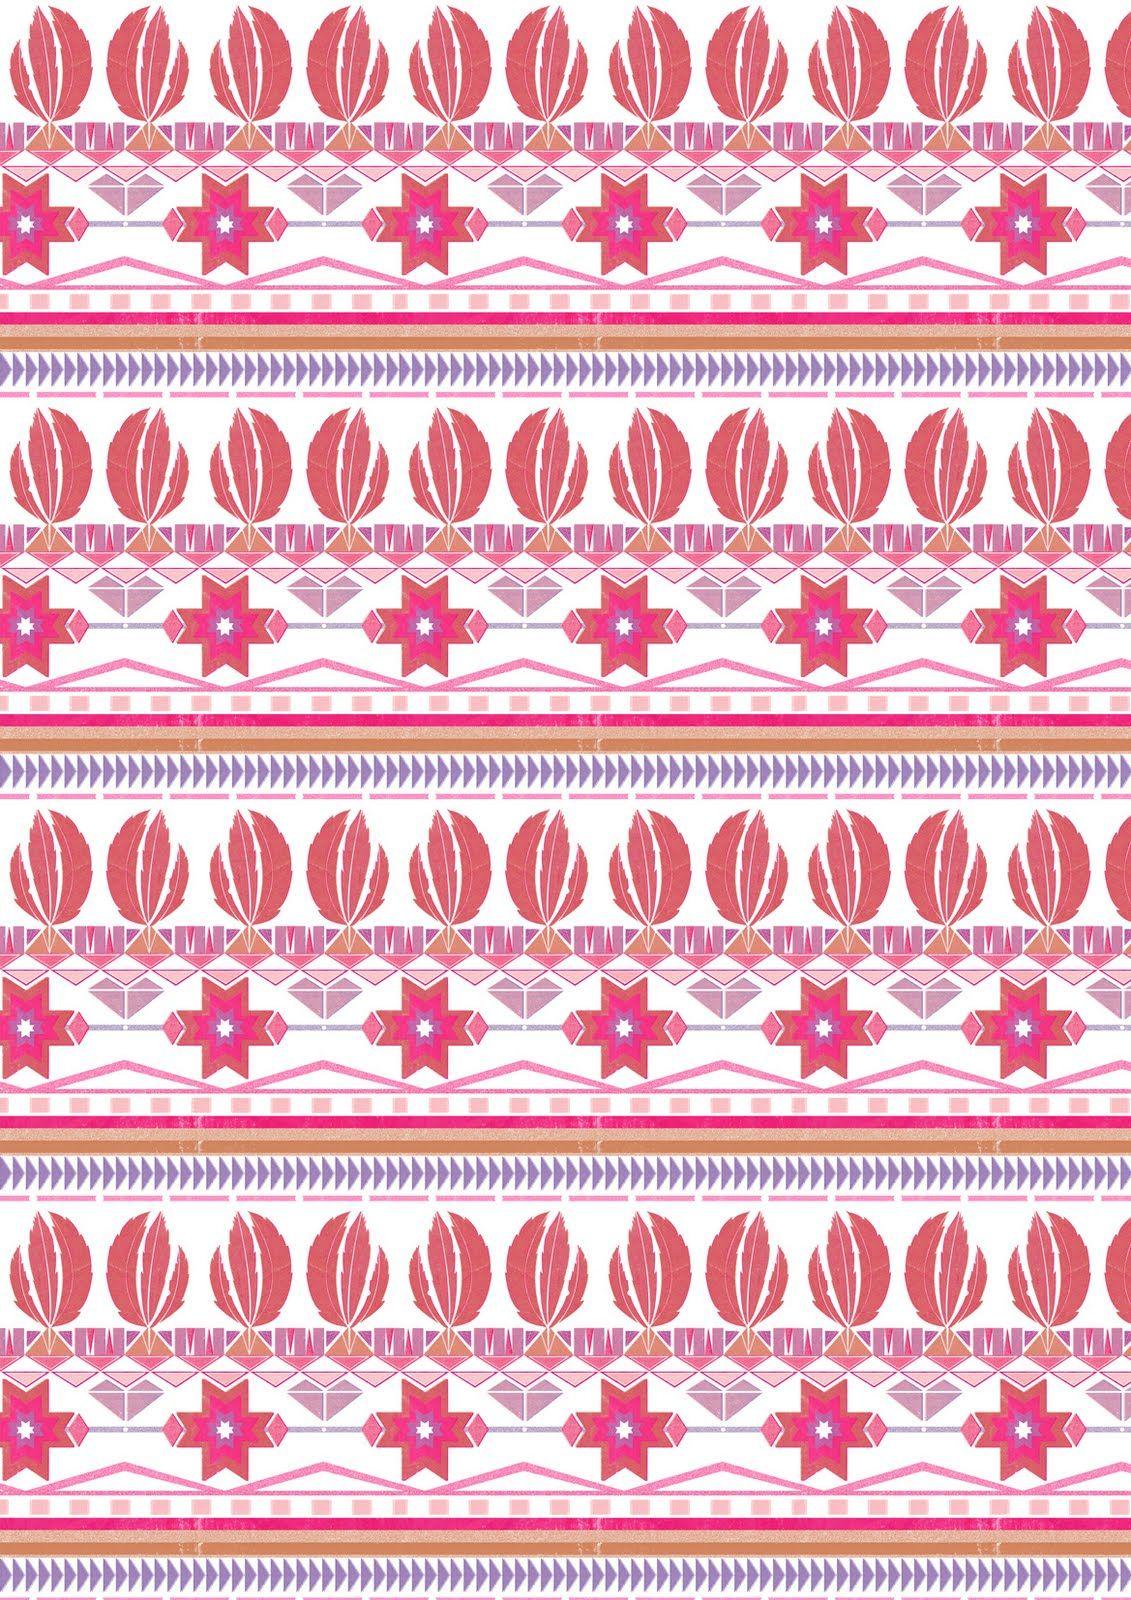 Kiley Victoria Illustration: My Aztec pattern